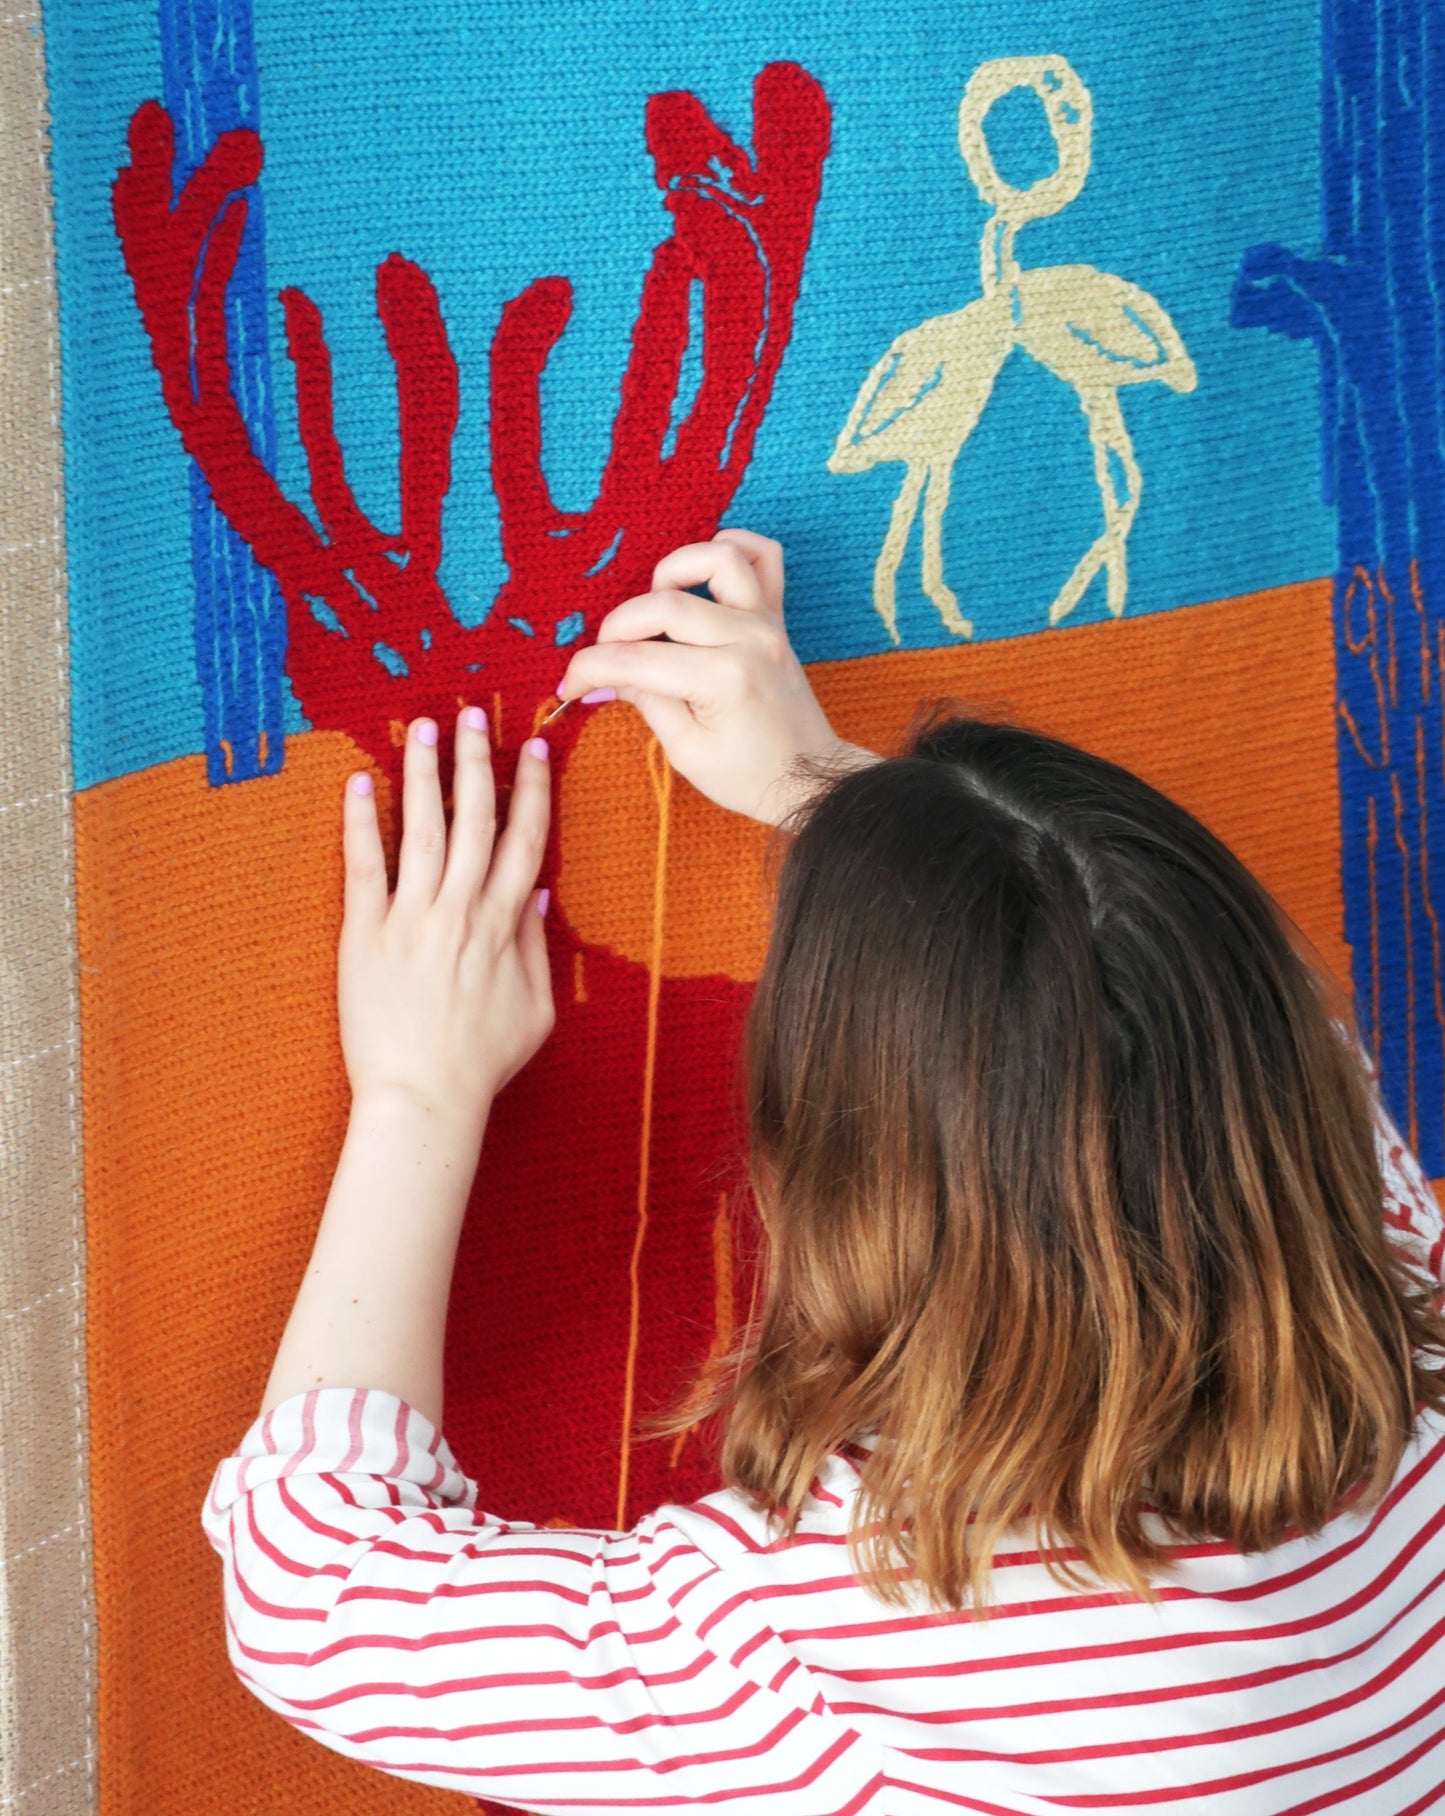 Wandteppich mit Arraiolos-Stich Workshop - in Milharado, Portugal